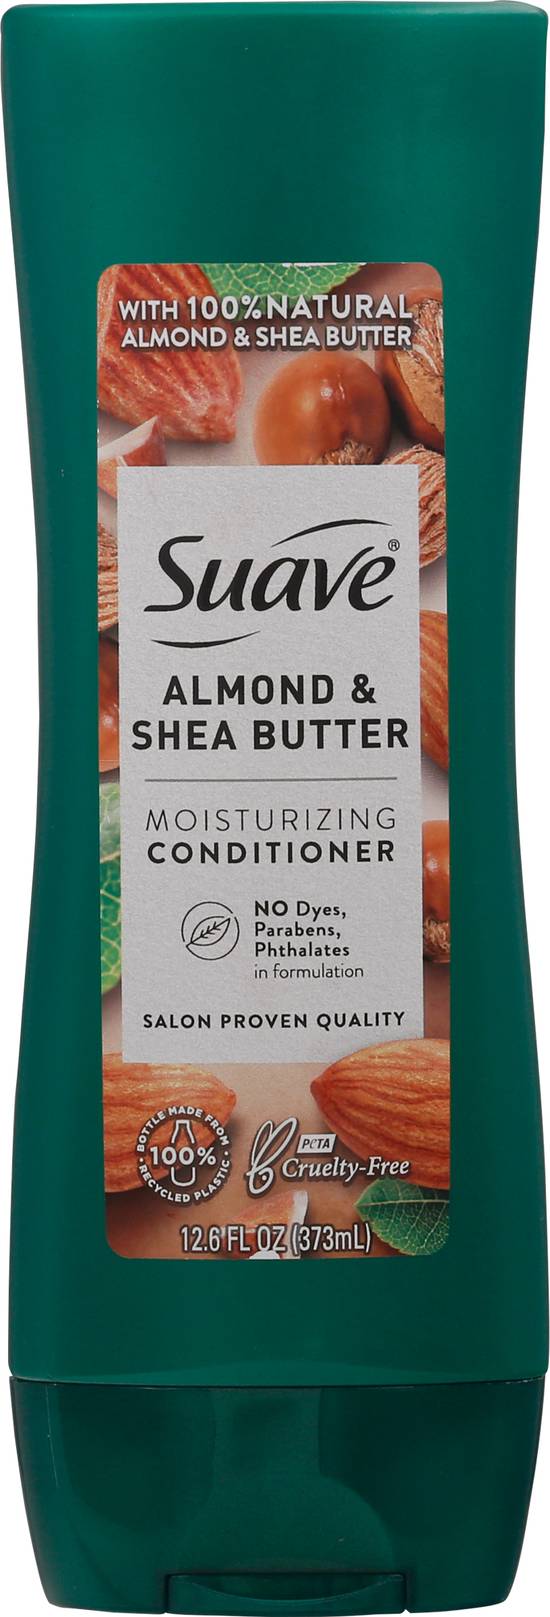 Suave Almond & Shea Butter Moisturizing Conditioner